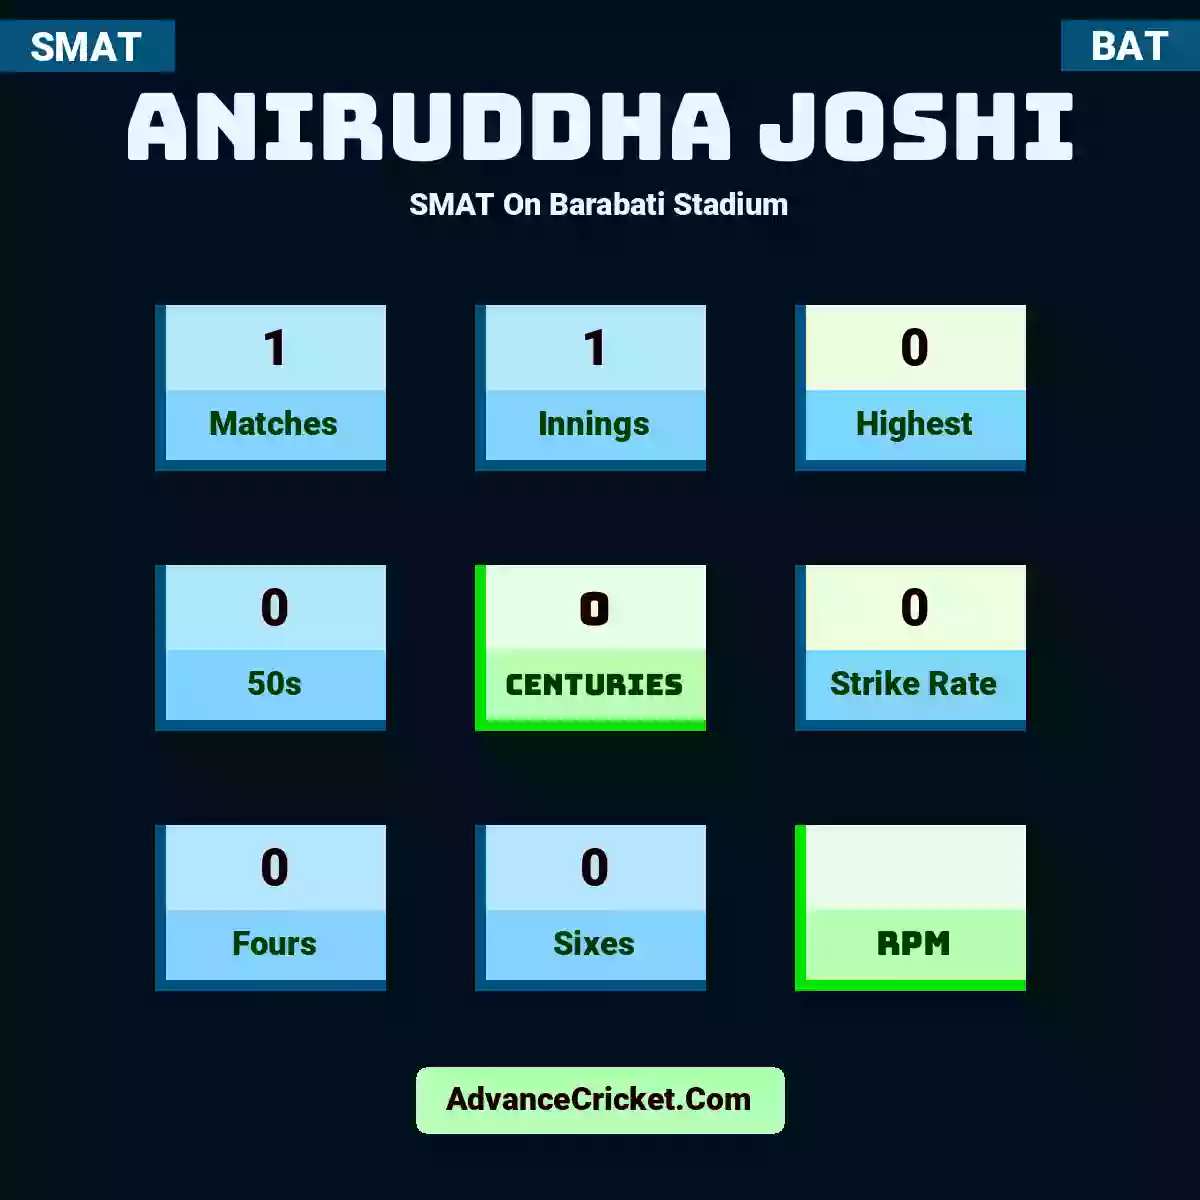 Aniruddha Joshi SMAT  On Barabati Stadium, Aniruddha Joshi played 1 matches, scored 0 runs as highest, 0 half-centuries, and 0 centuries, with a strike rate of 0. A.Joshi hit 0 fours and 0 sixes.